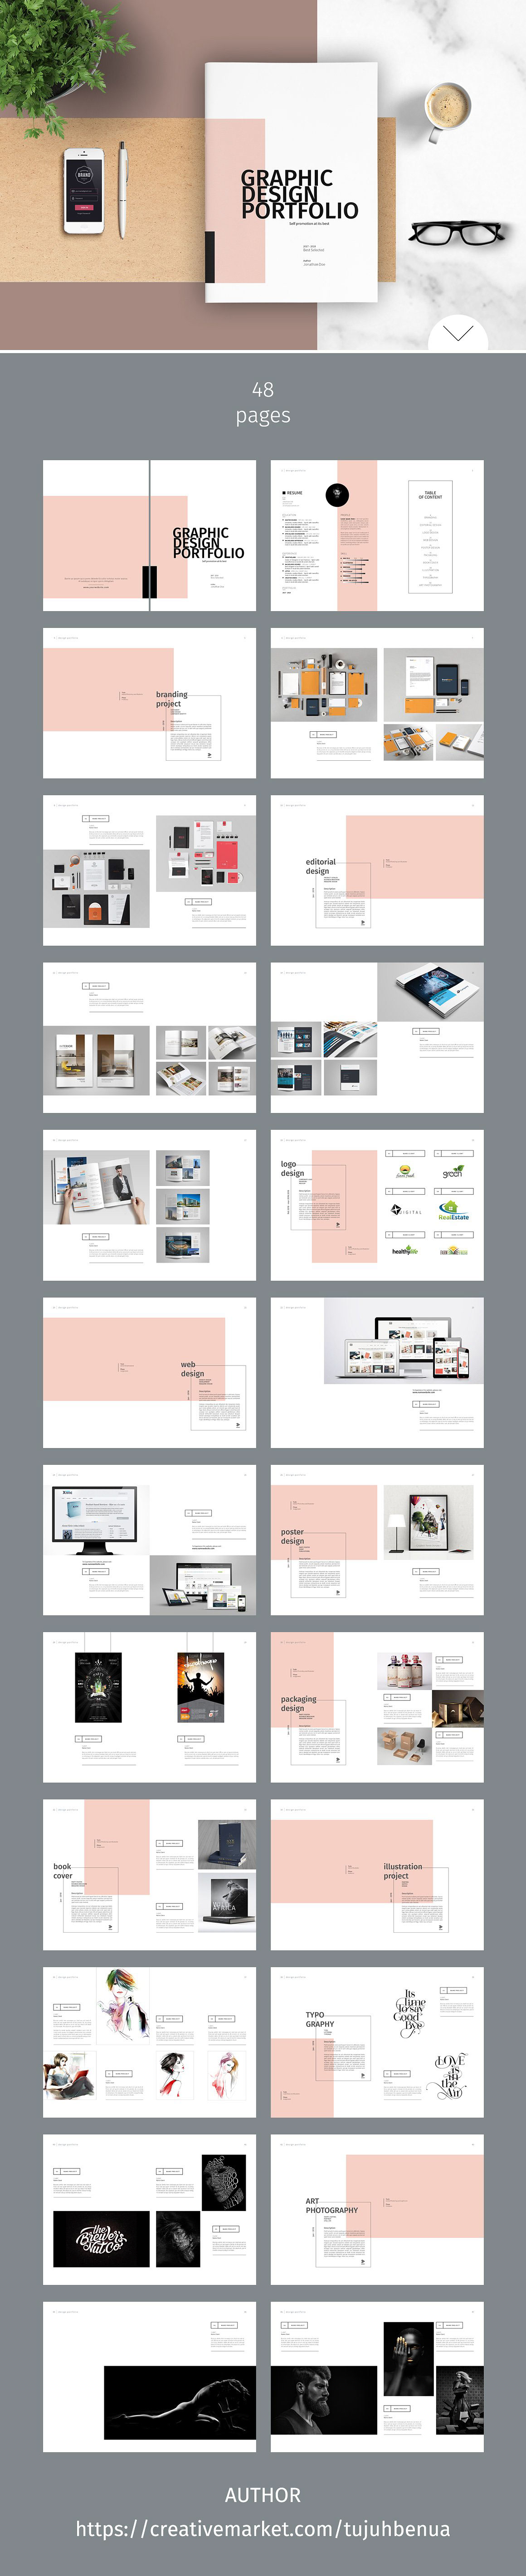 graphic-design-portfolio-template-behance